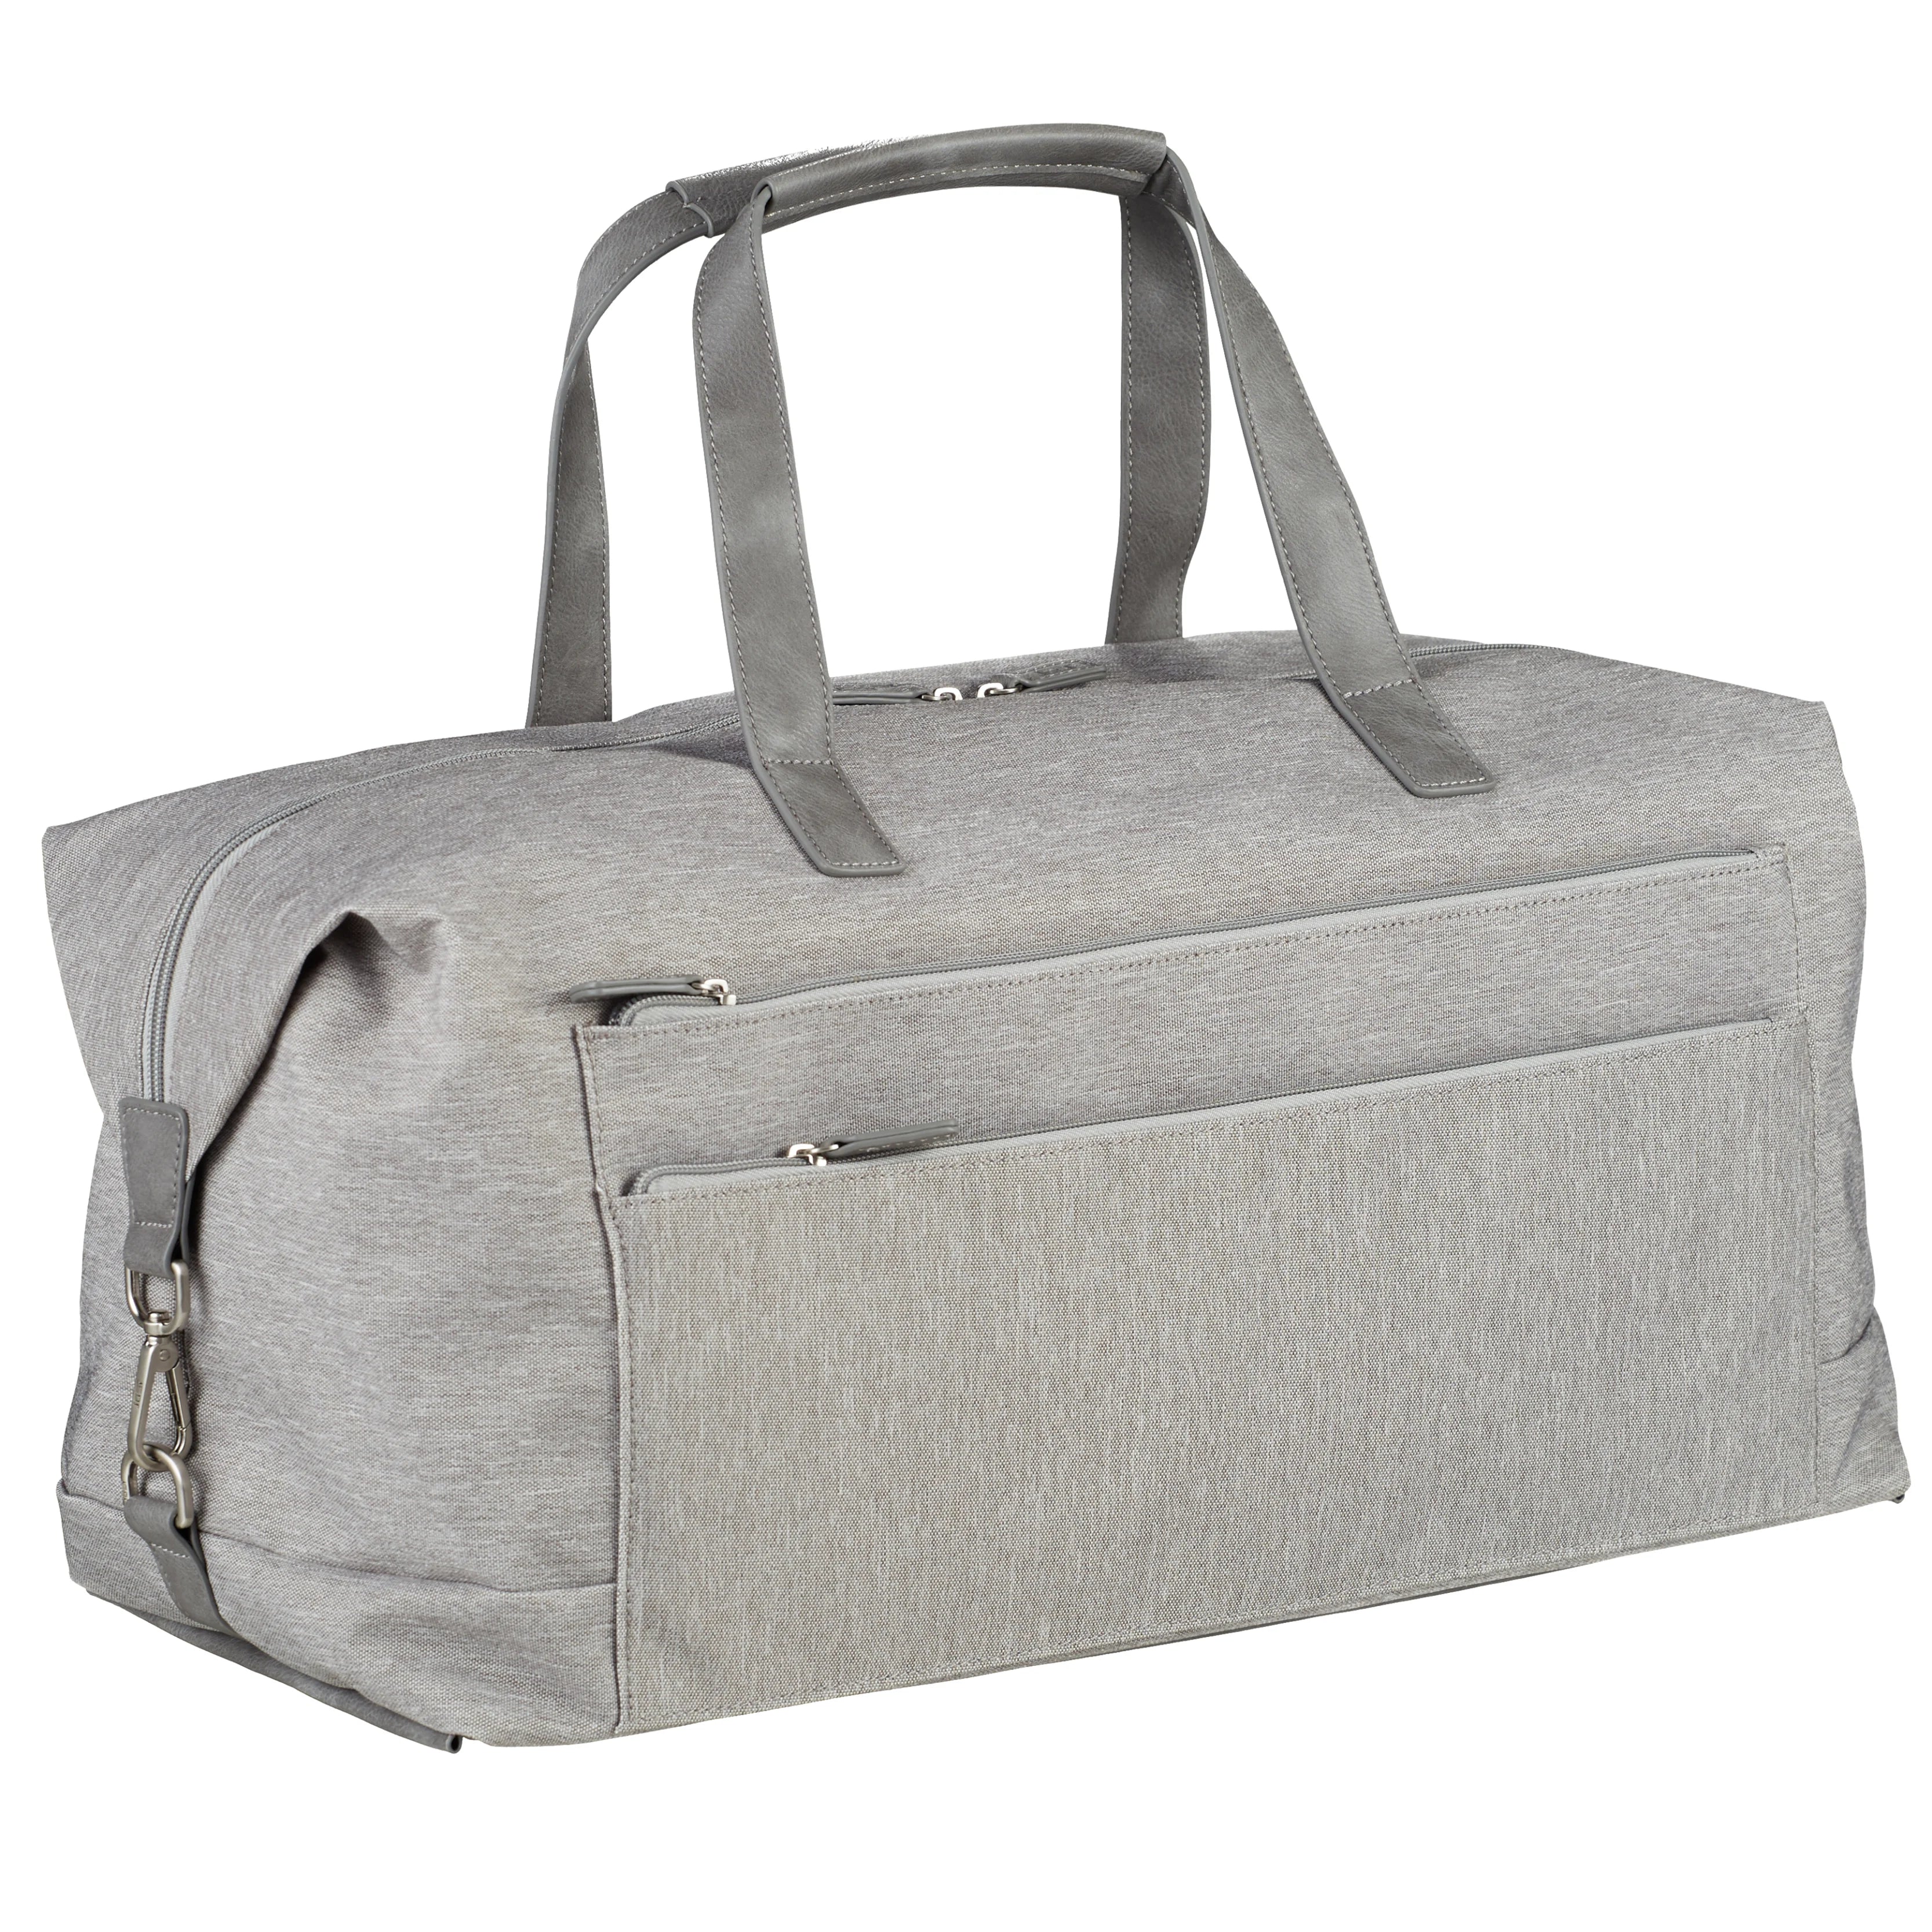 Jost Bergen travel bag 50 cm - light gray